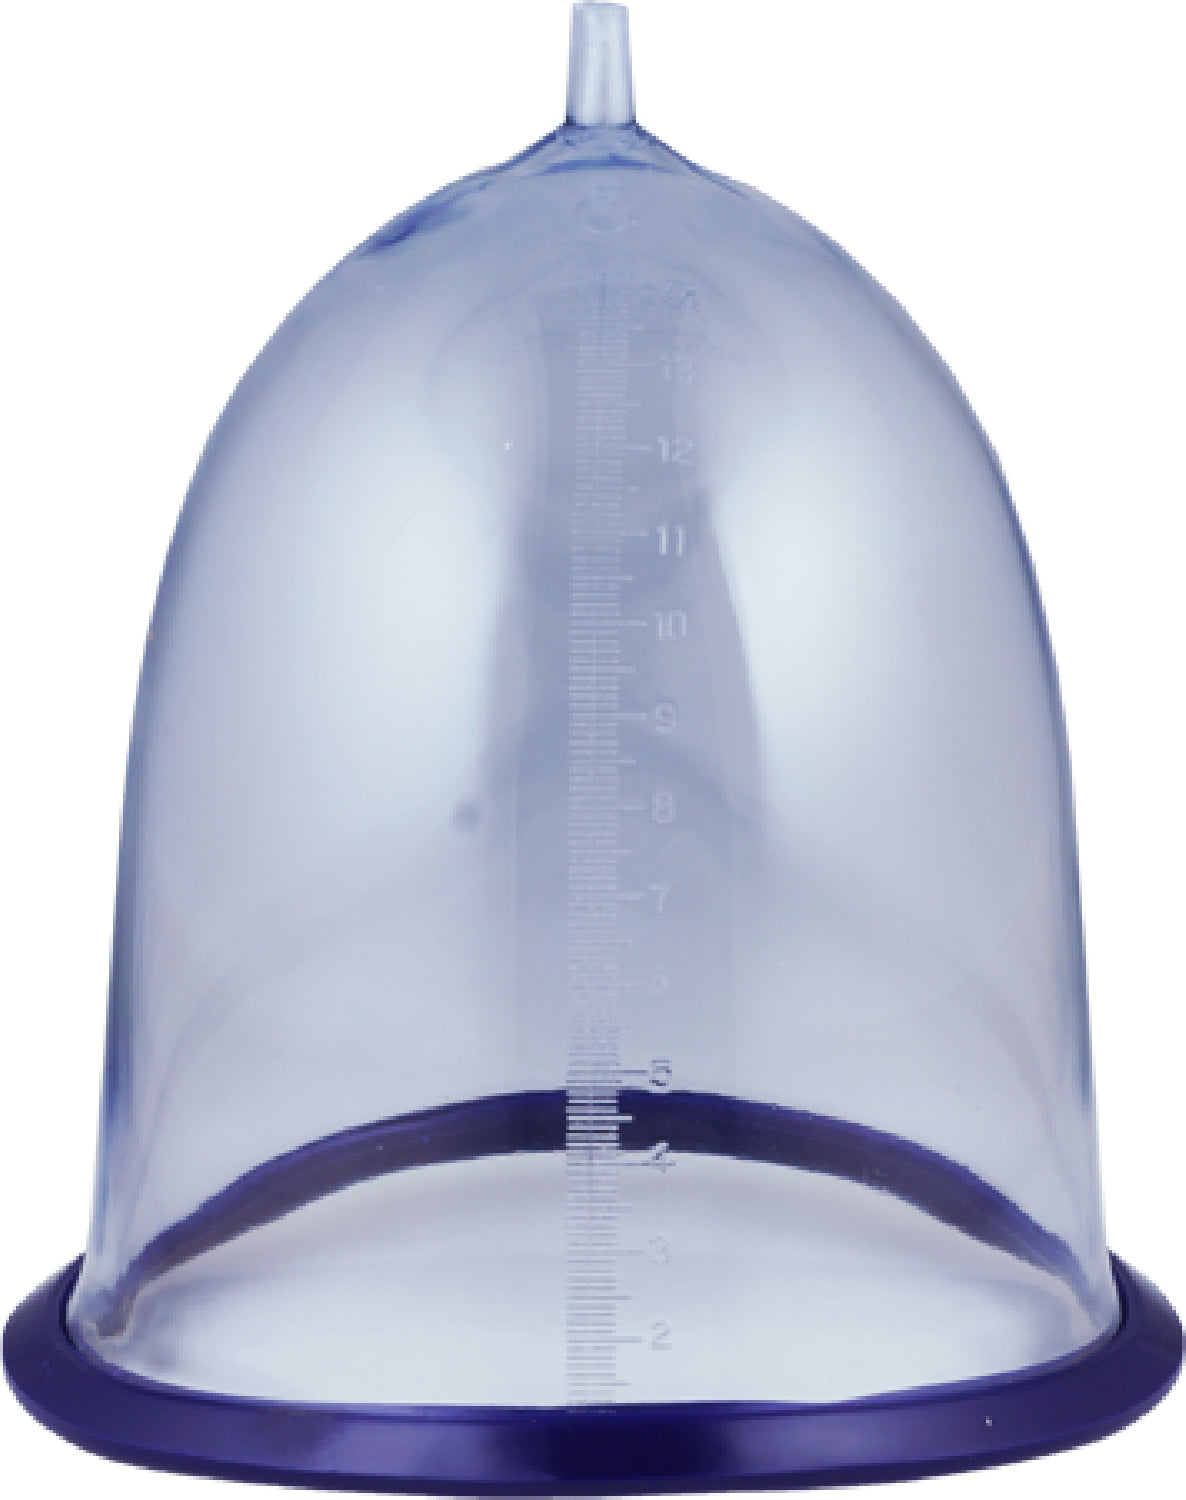 Bustline Increaser (Large) Breast Pump  - Club X